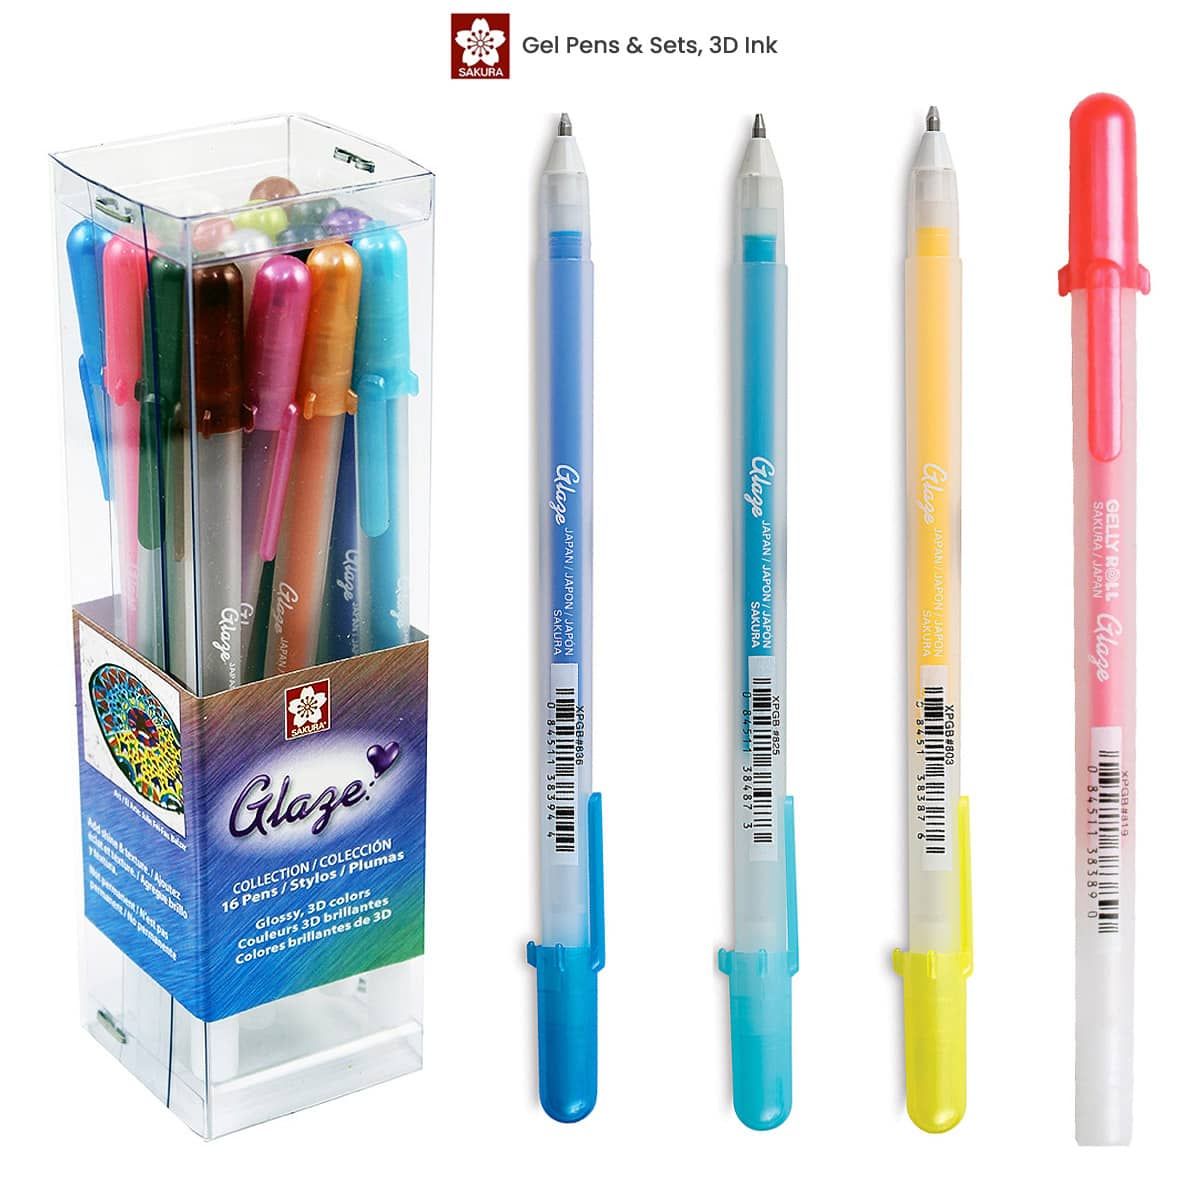 https://www.jerrysartarama.com/media/catalog/product/cache/ecb49a32eeb5603594b082bd5fe65733/s/a/sakura-glaze-gelly-roll-gel-pens-3d-pens-main.jpg